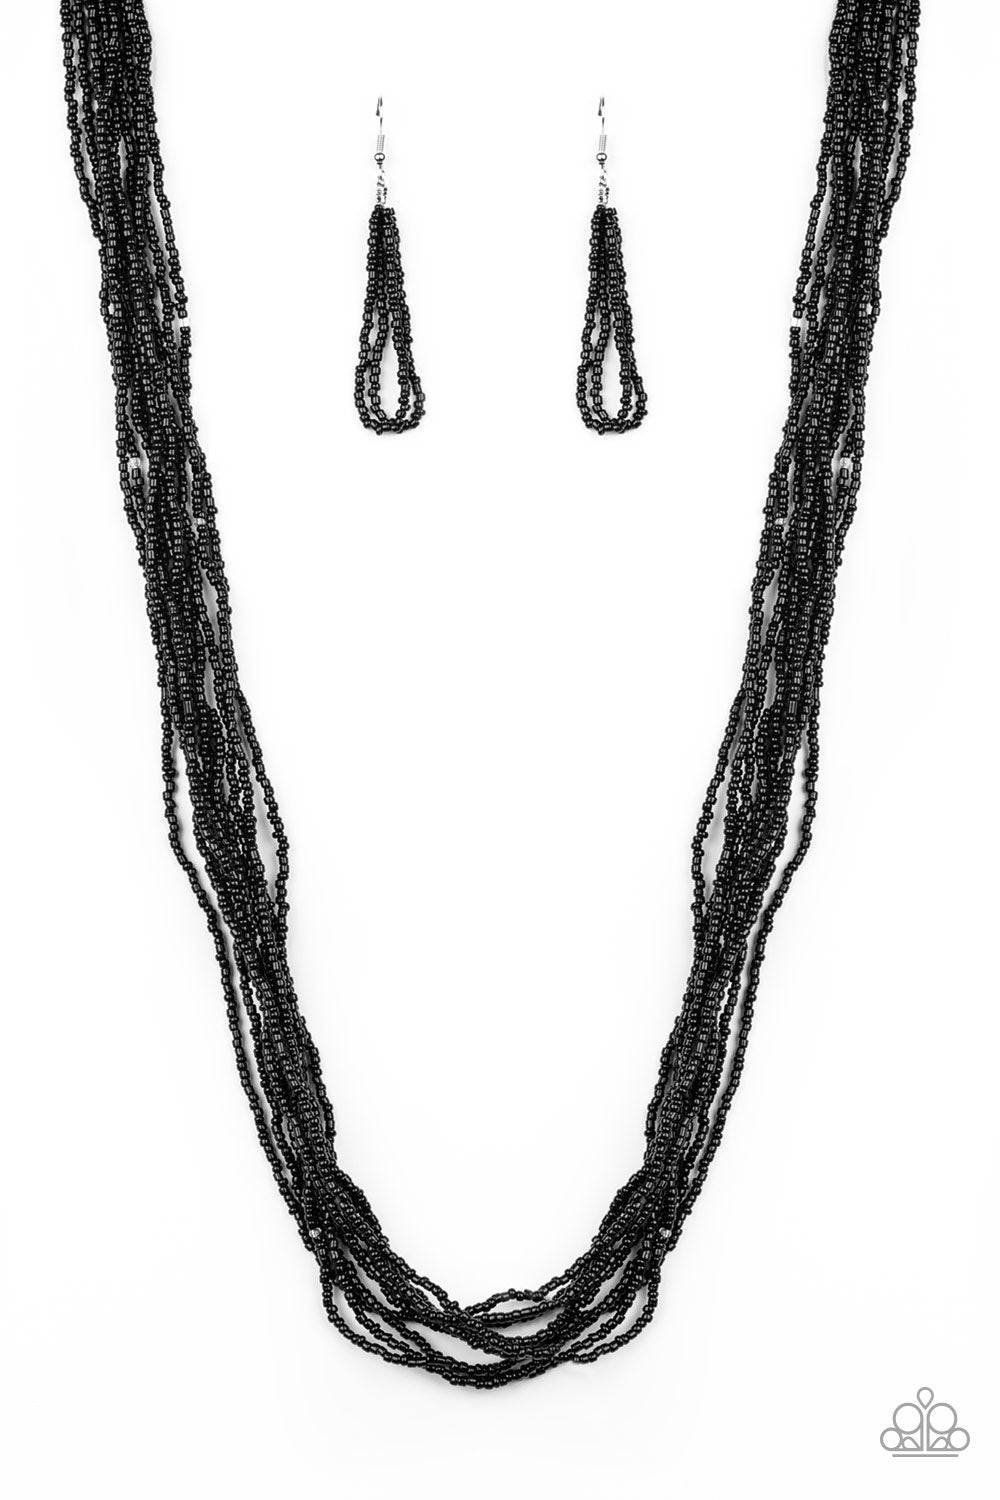 Paparazzi Necklace ~ Congo Colada - Black Seed Beads Necklace